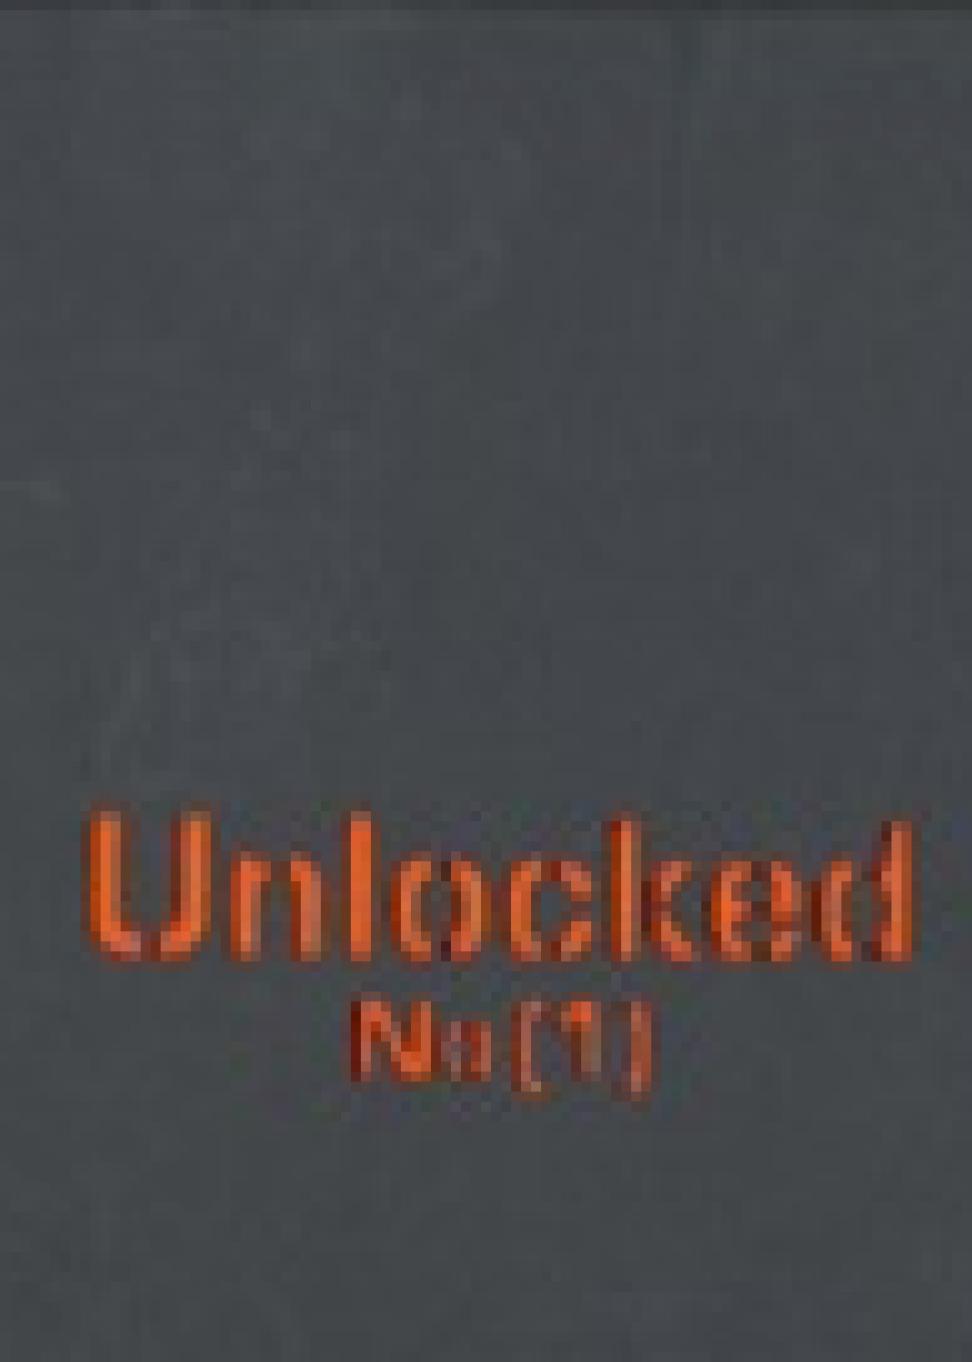 Unlocked No [1]